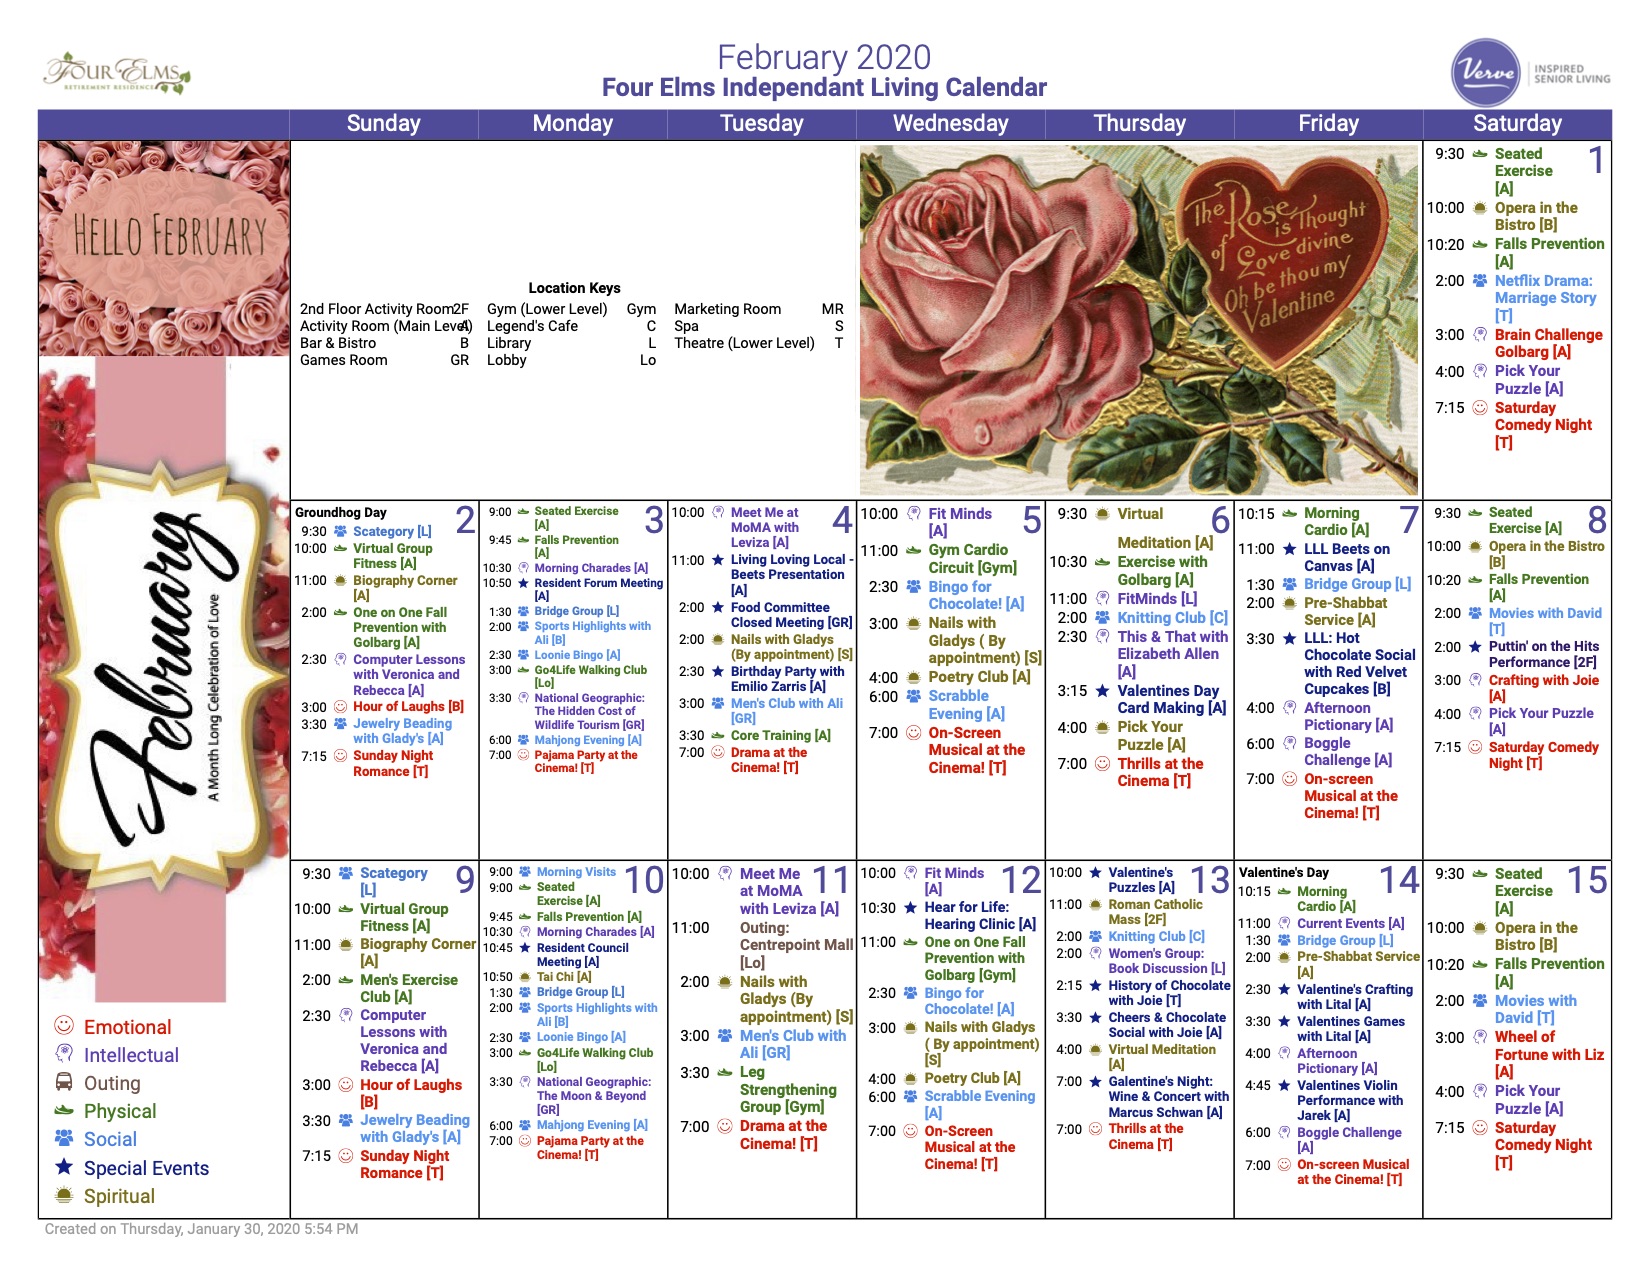 Independent February Calendar